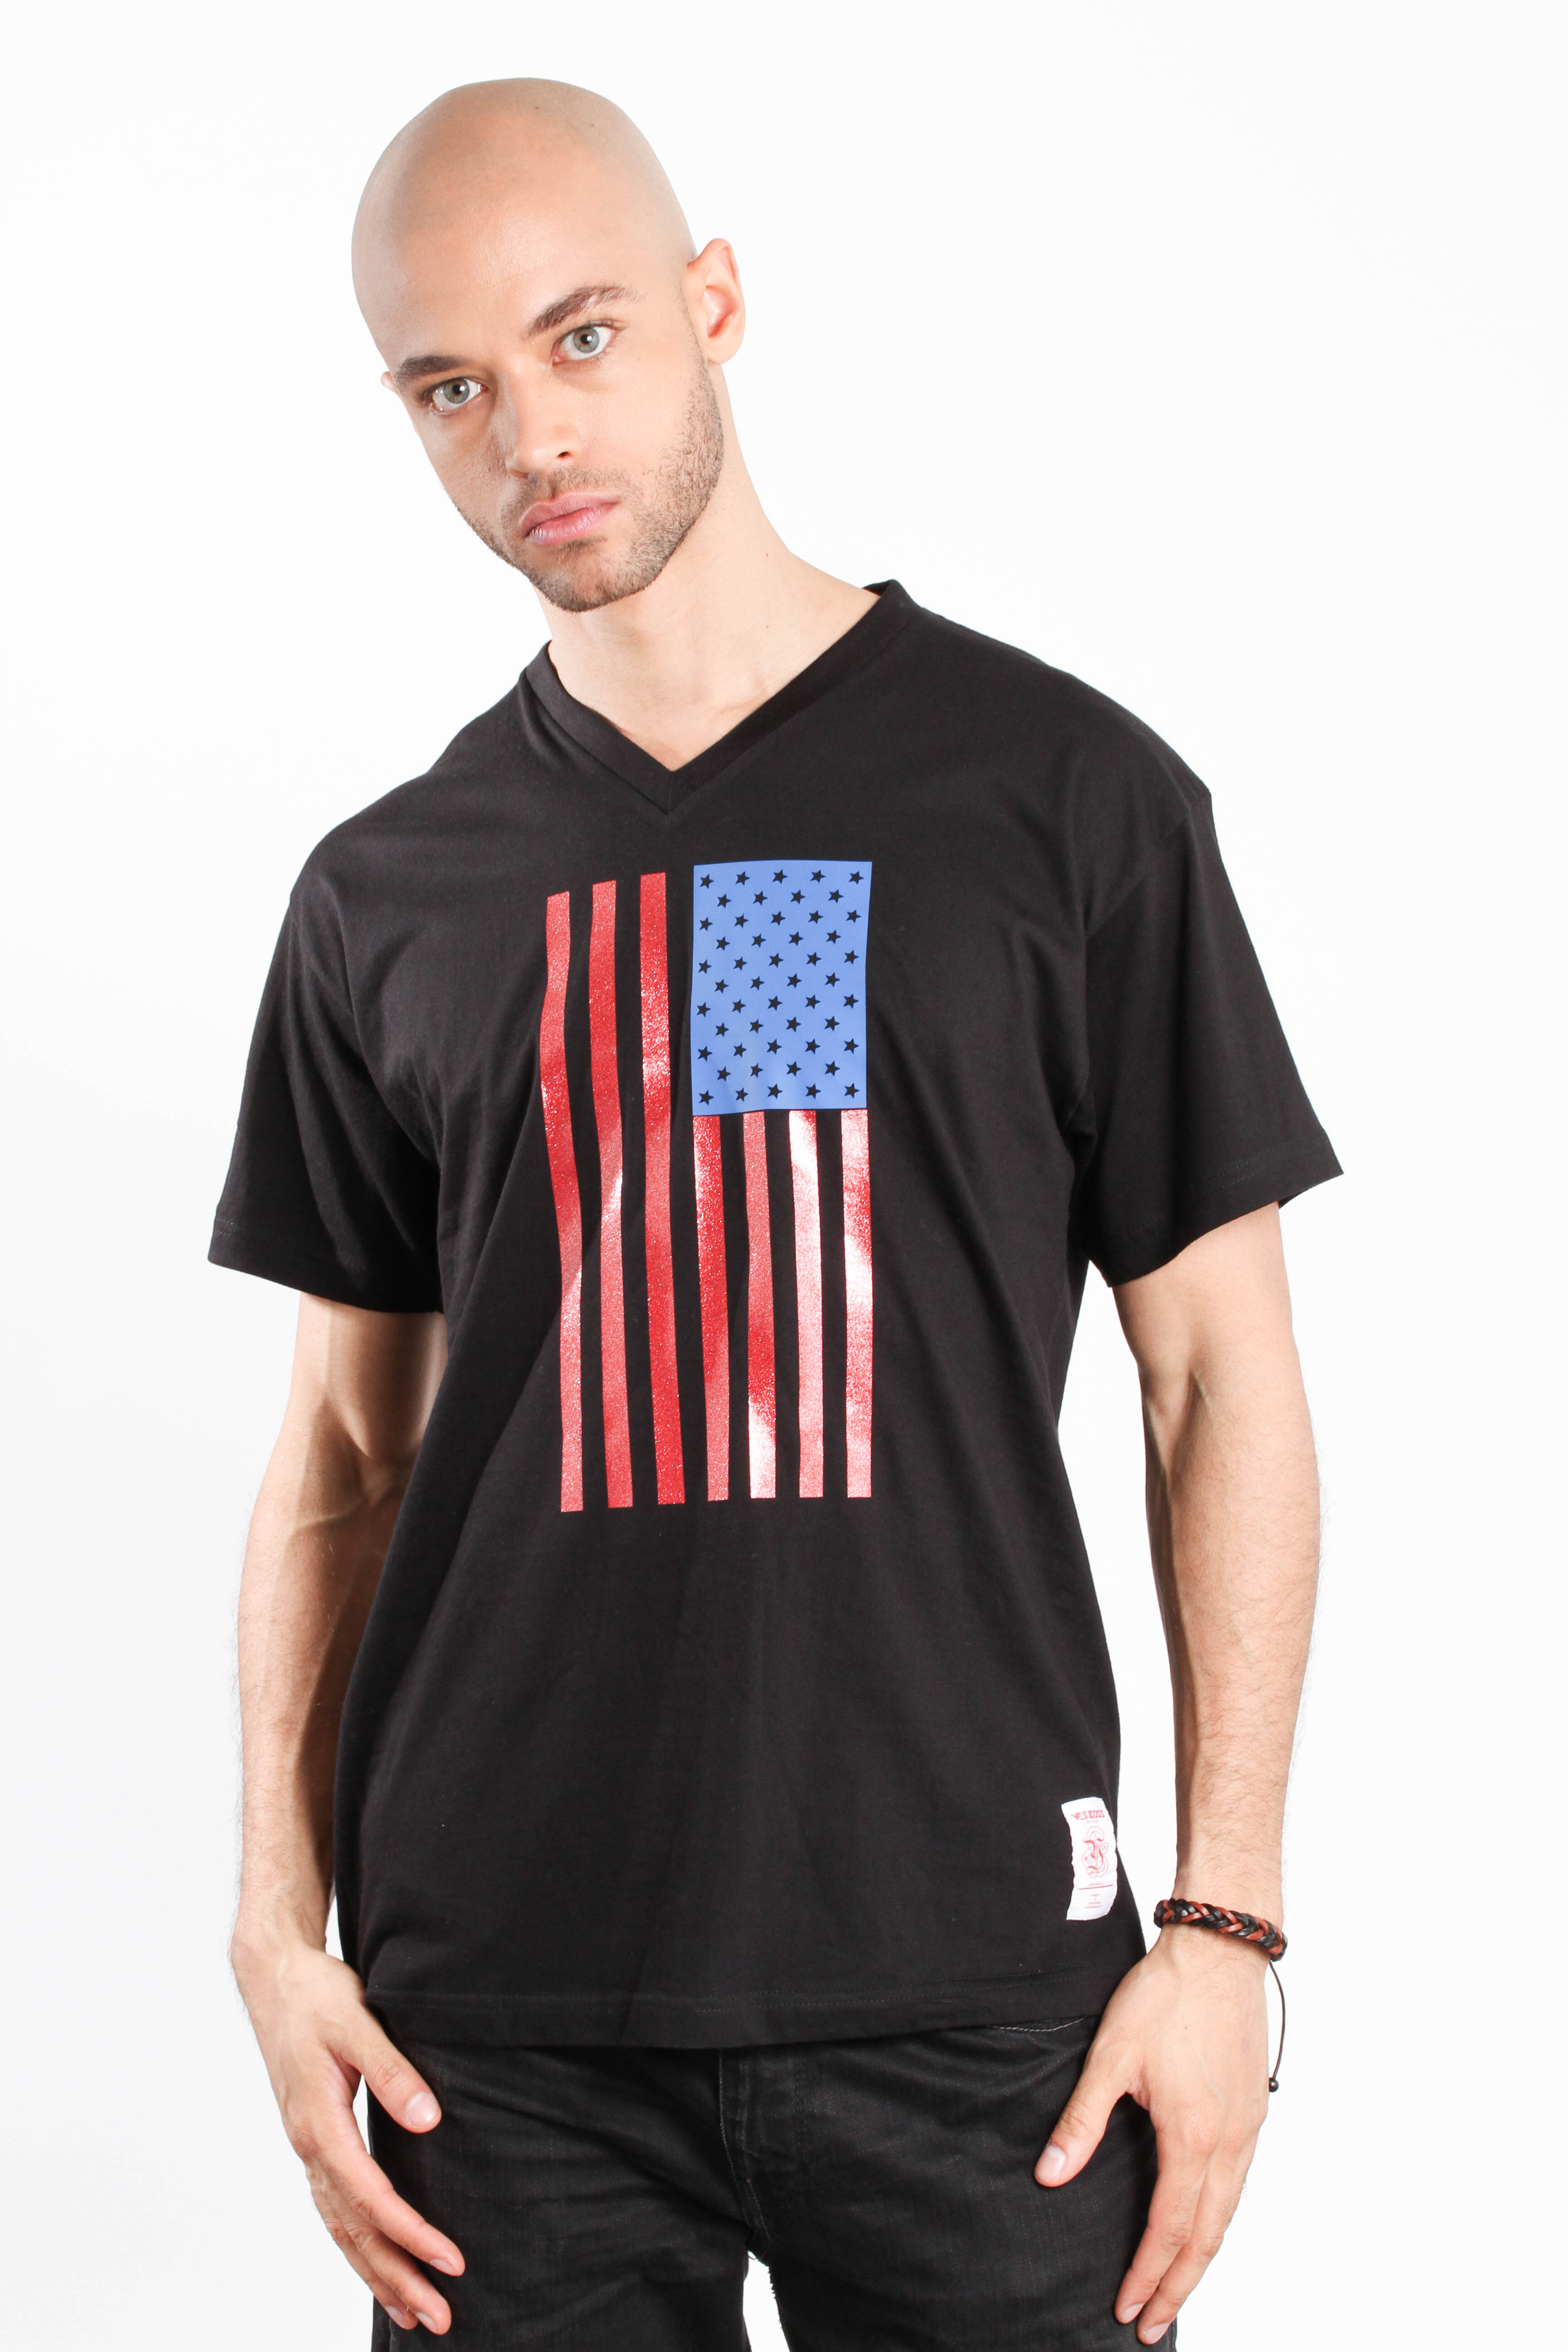 Star Spangled Banner T-Shirt – Yes Boss Clothing